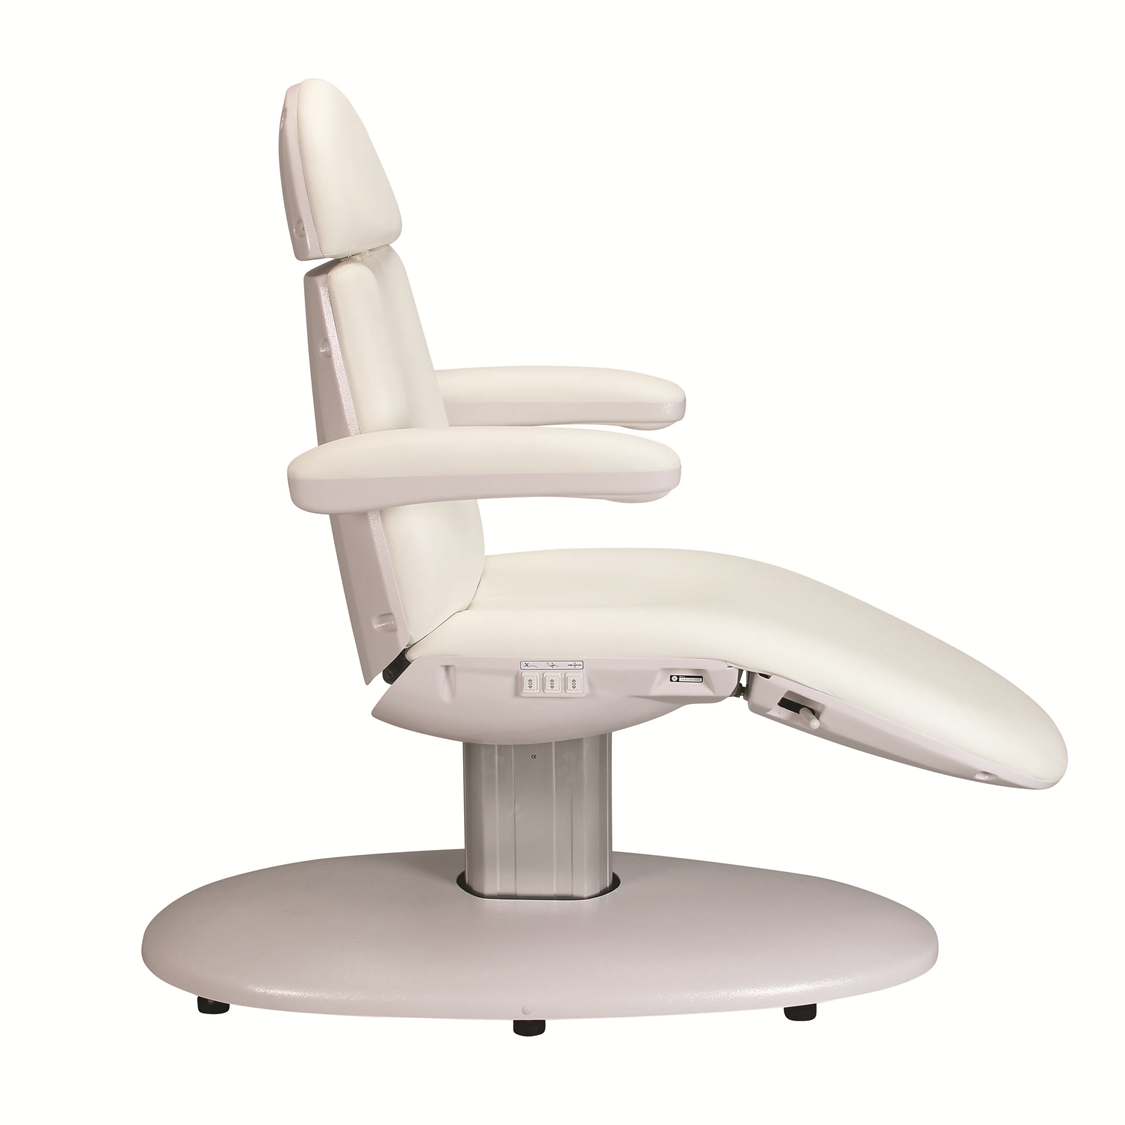 Pebble Spa Treatment Table - Garfield Commercial Enterprises Salon Equipment Spa Furniture Barber Chair Luxury